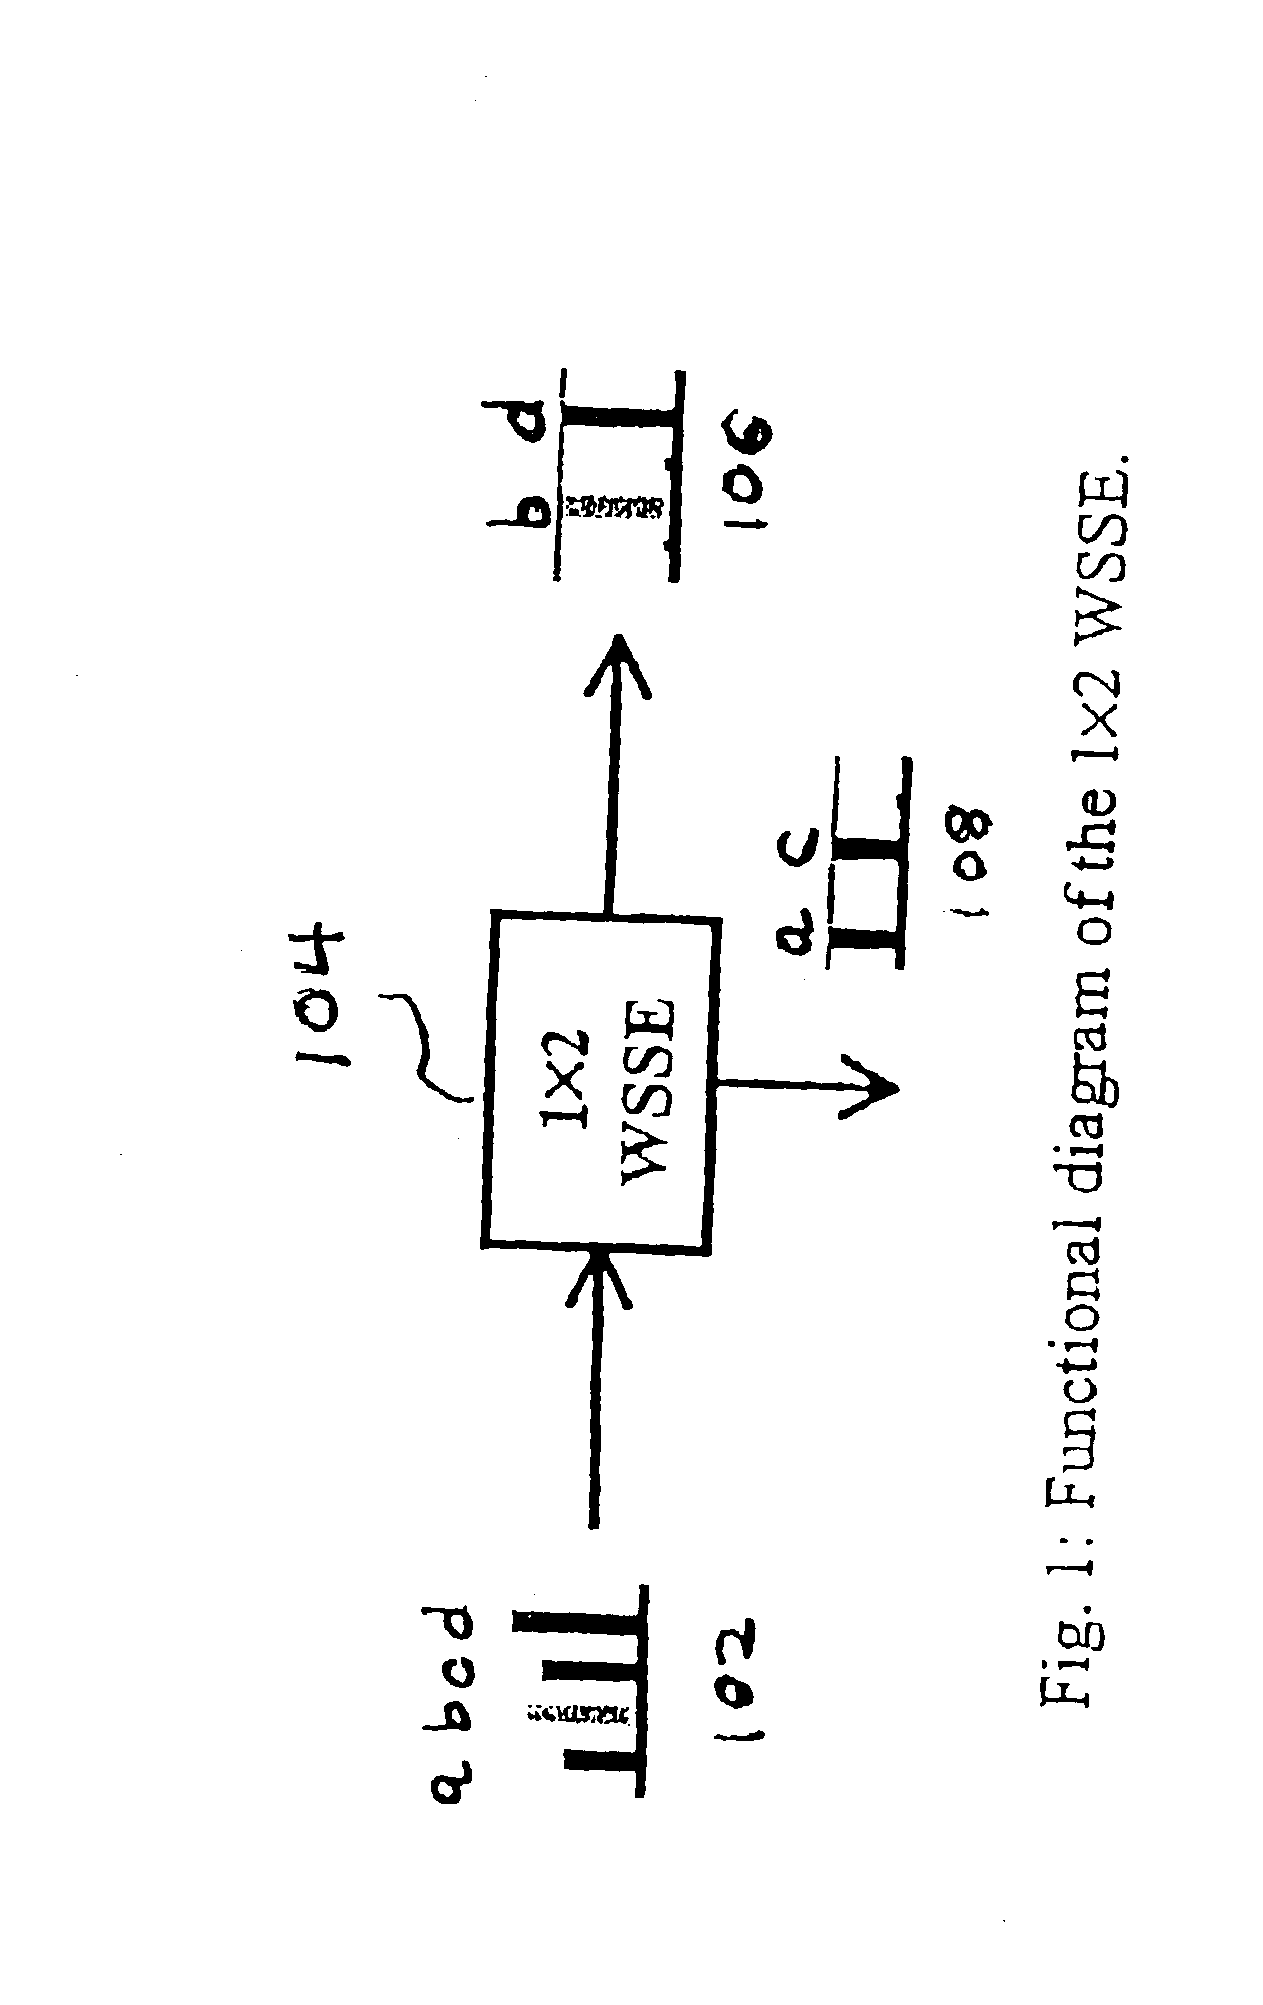 Dual modulator wavelength-selective switch and equalizer